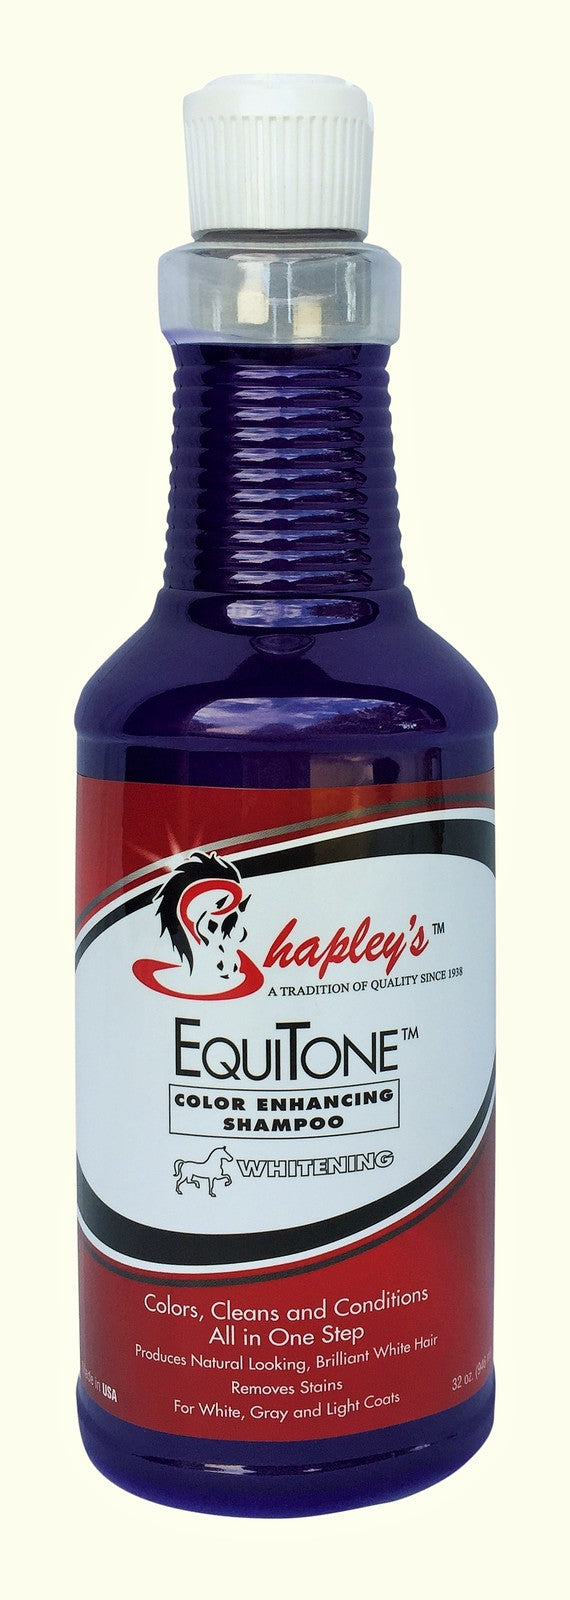 Shapley's EquiTone Shampoo Whitening 946ml